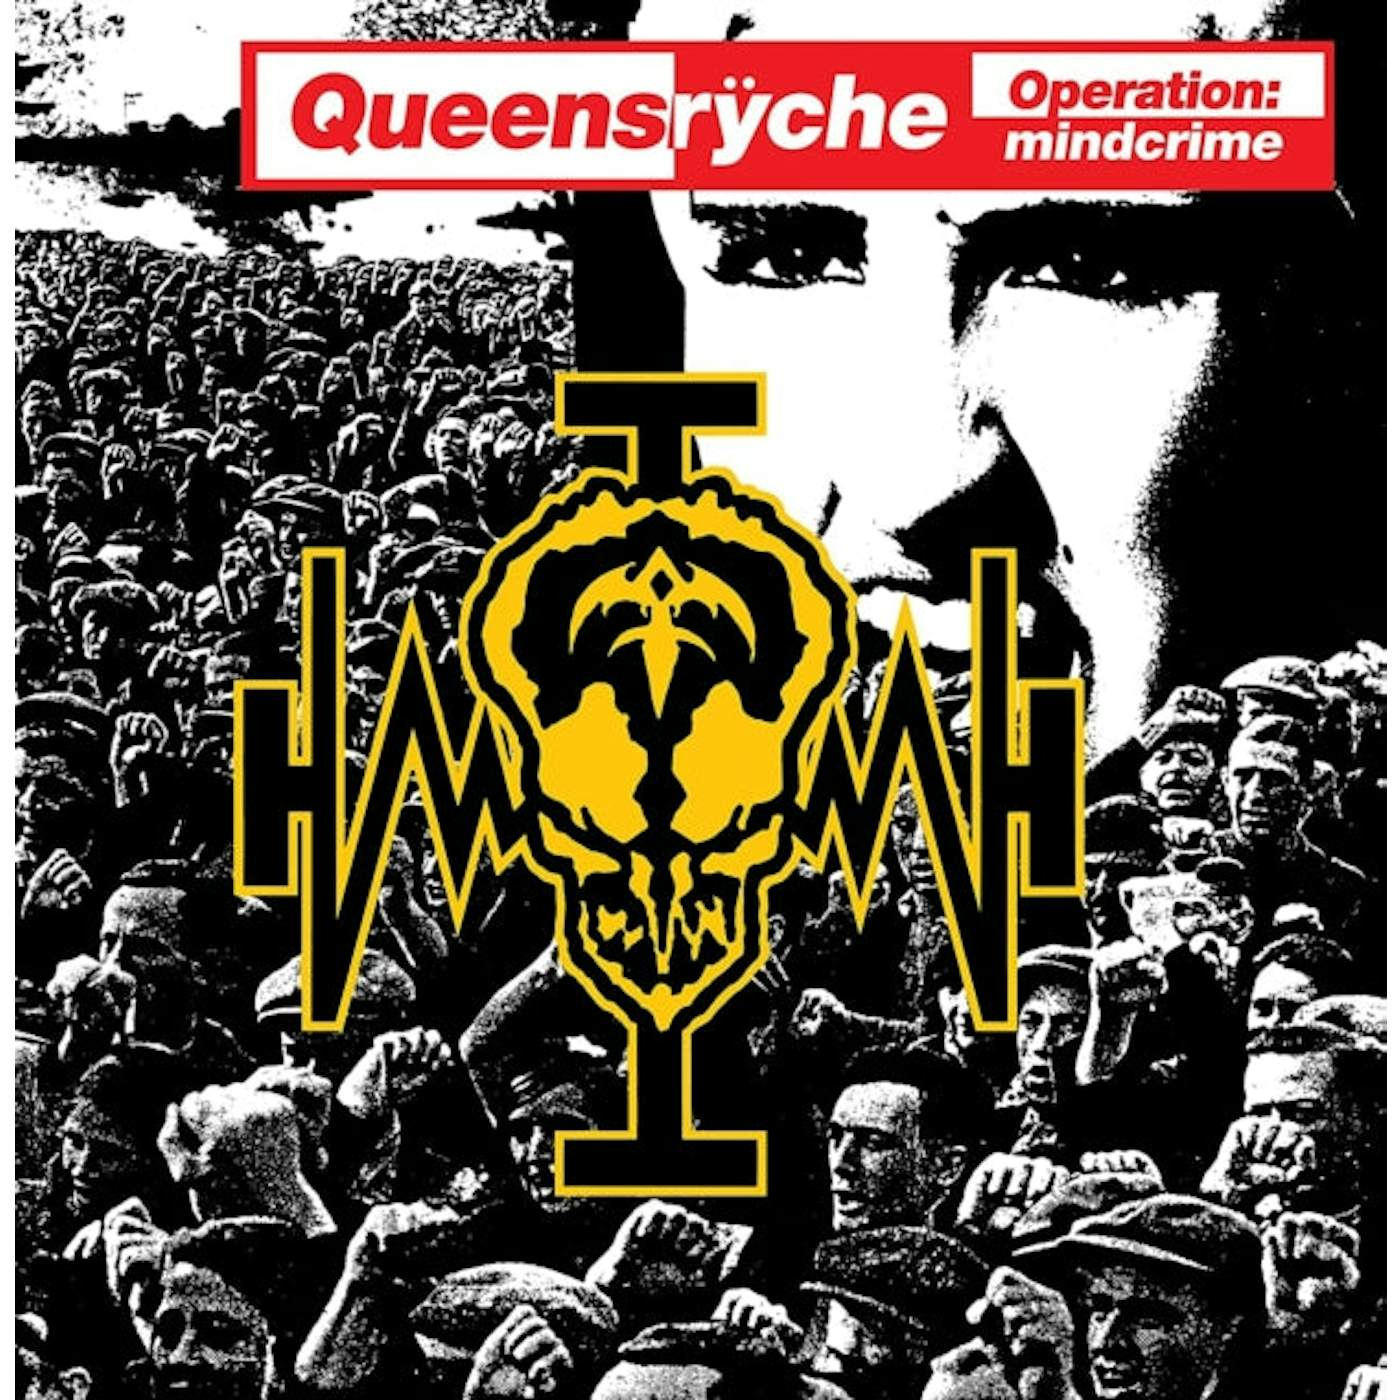 Queensrÿche LP Vinyl Record - Operation: Mindcrime